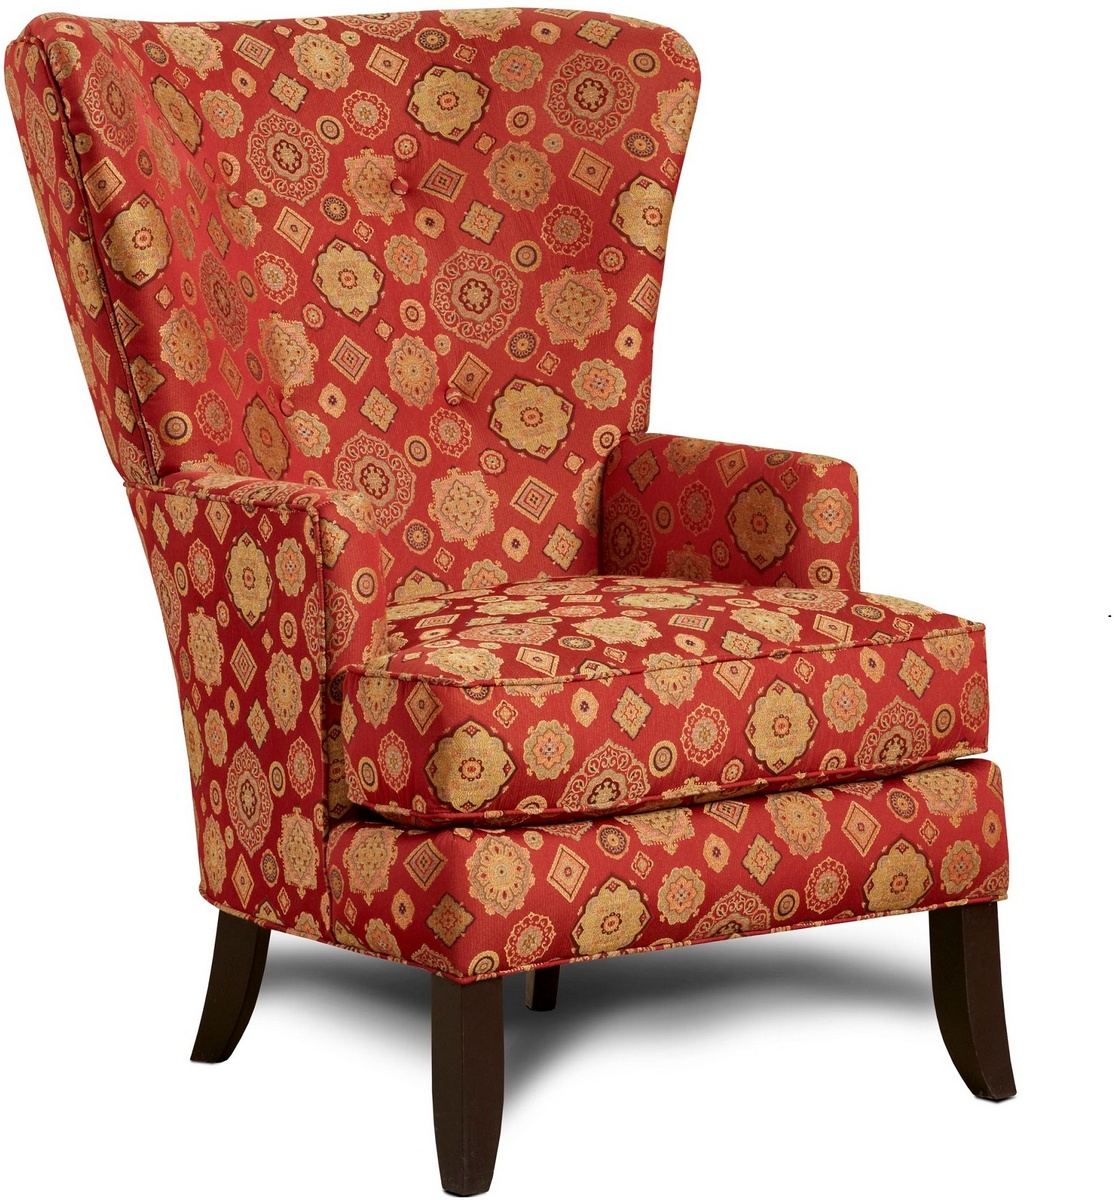 Davin Accent Chair - Chelsea Home Furniture 631316-c-mi